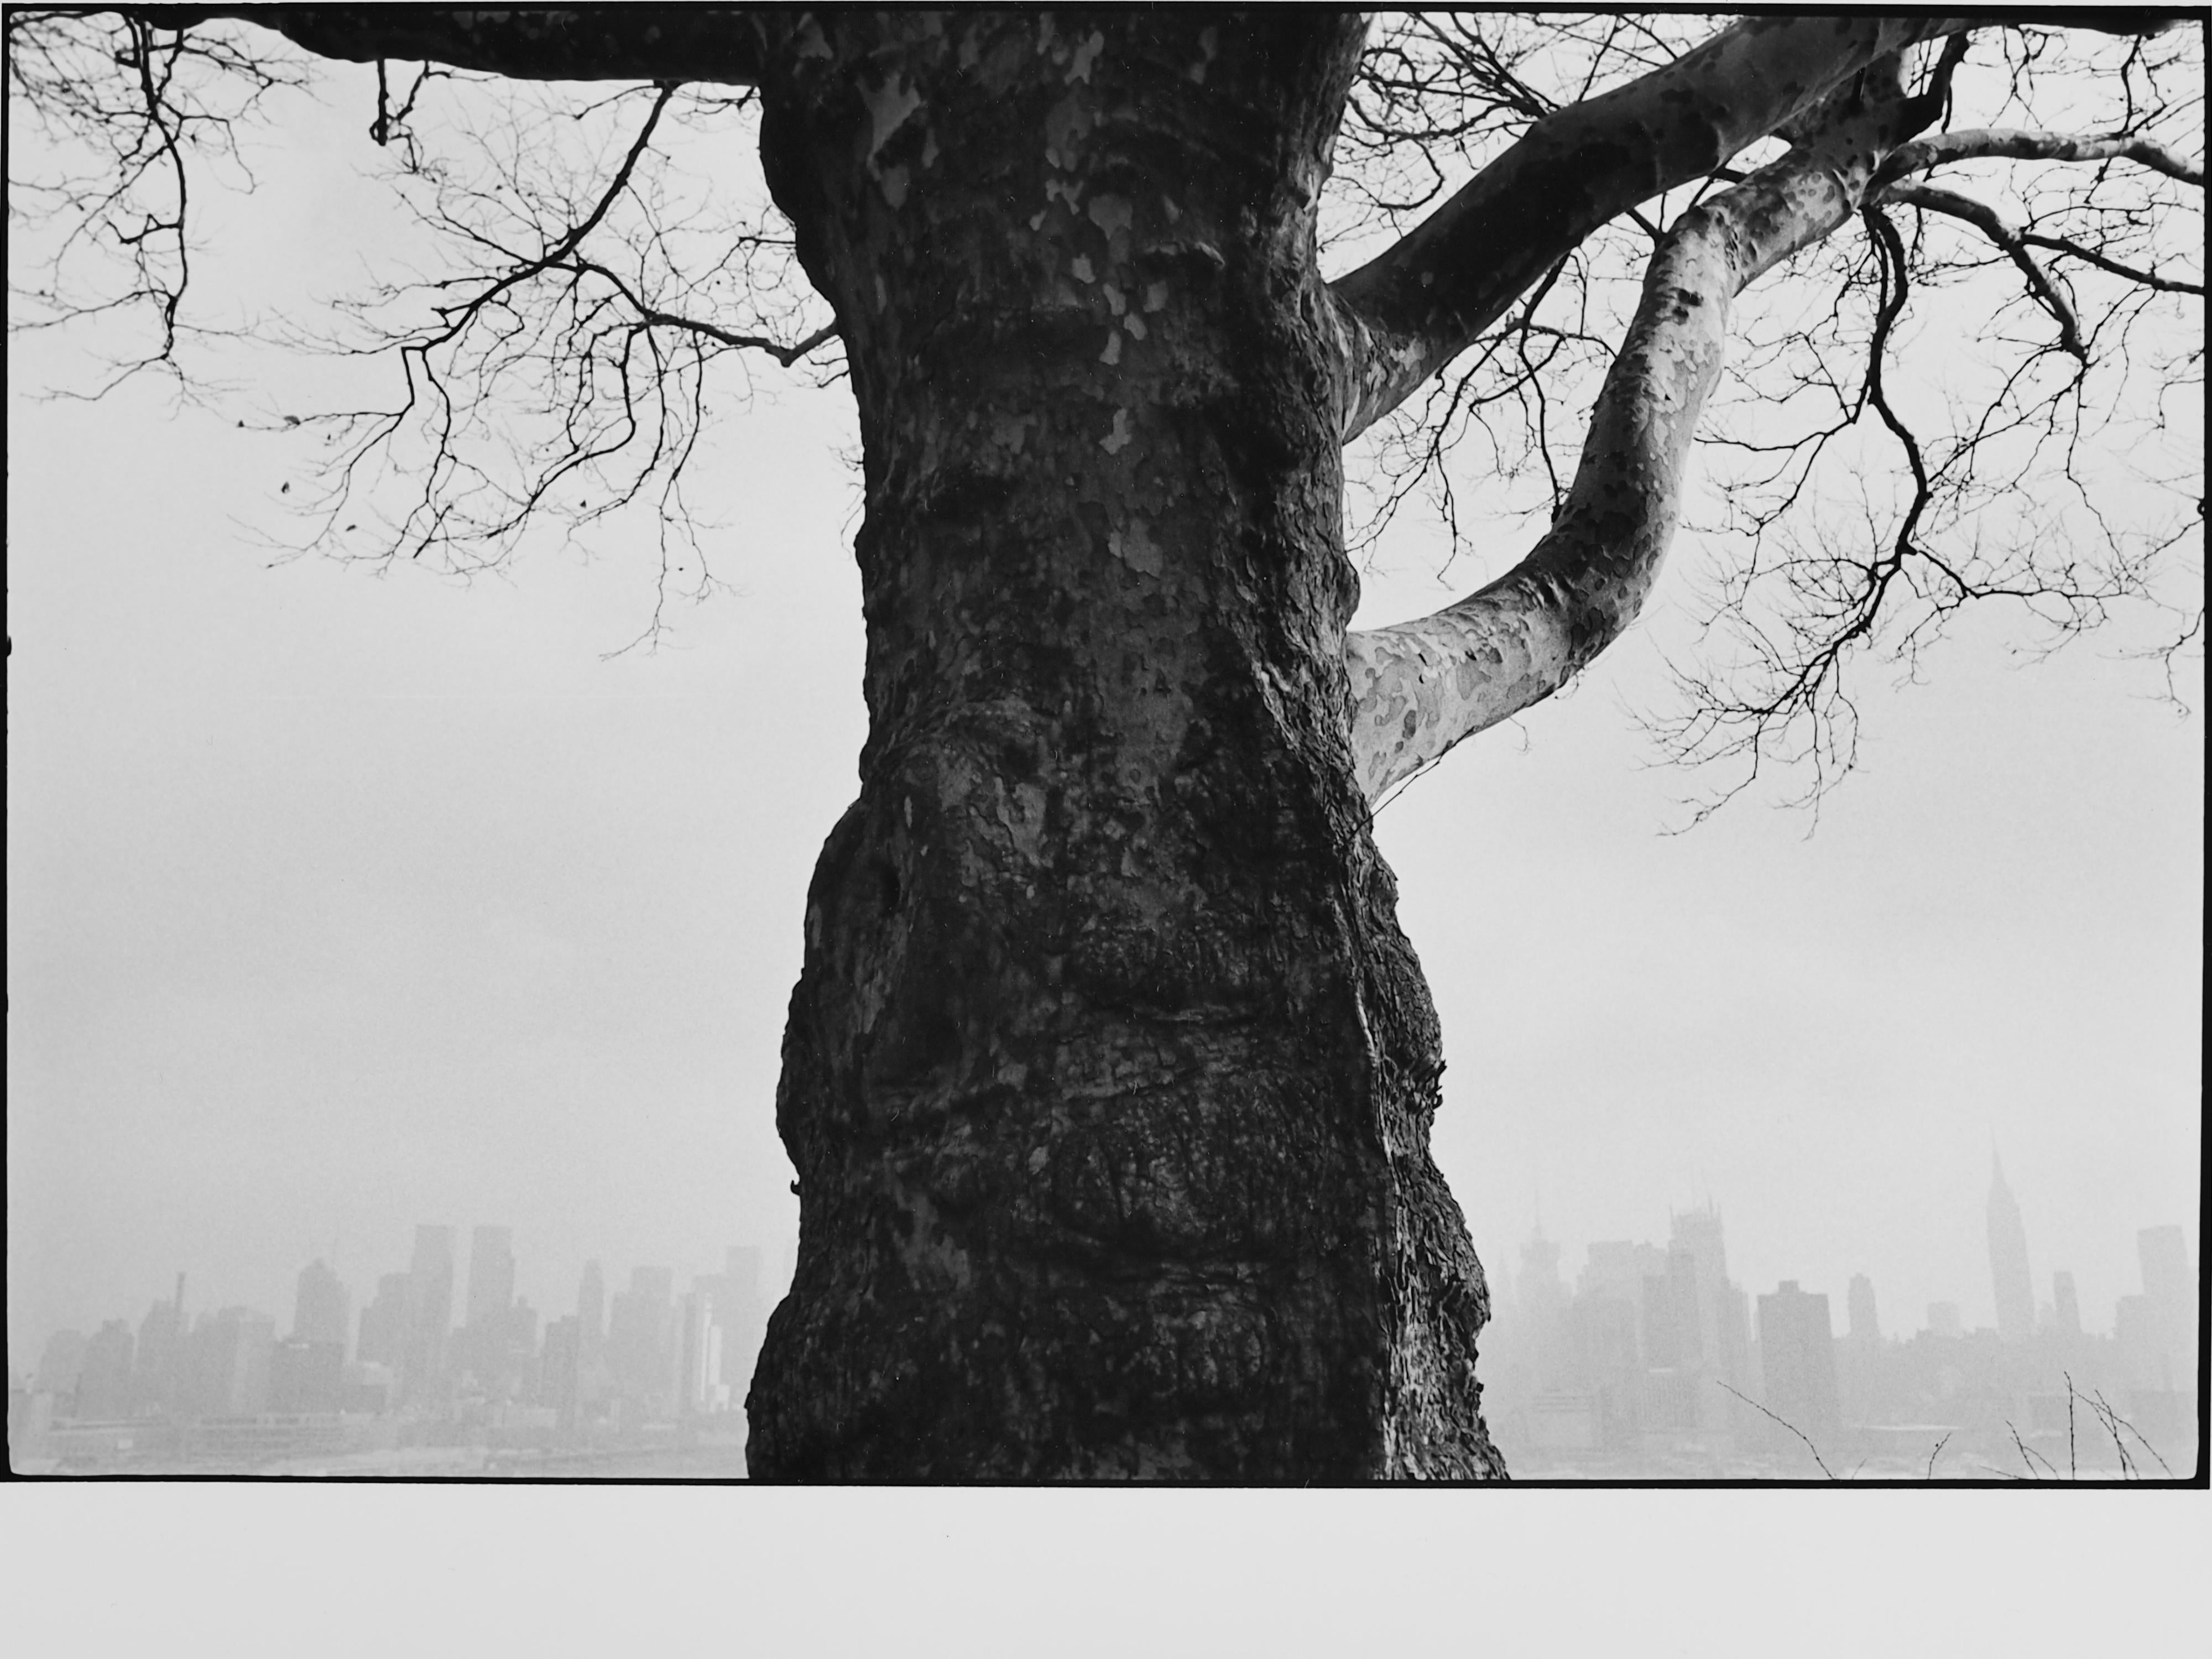 Koyo Tamaki Landscape Photograph - Untitled (0650-40), Original black and white photograph, 2012